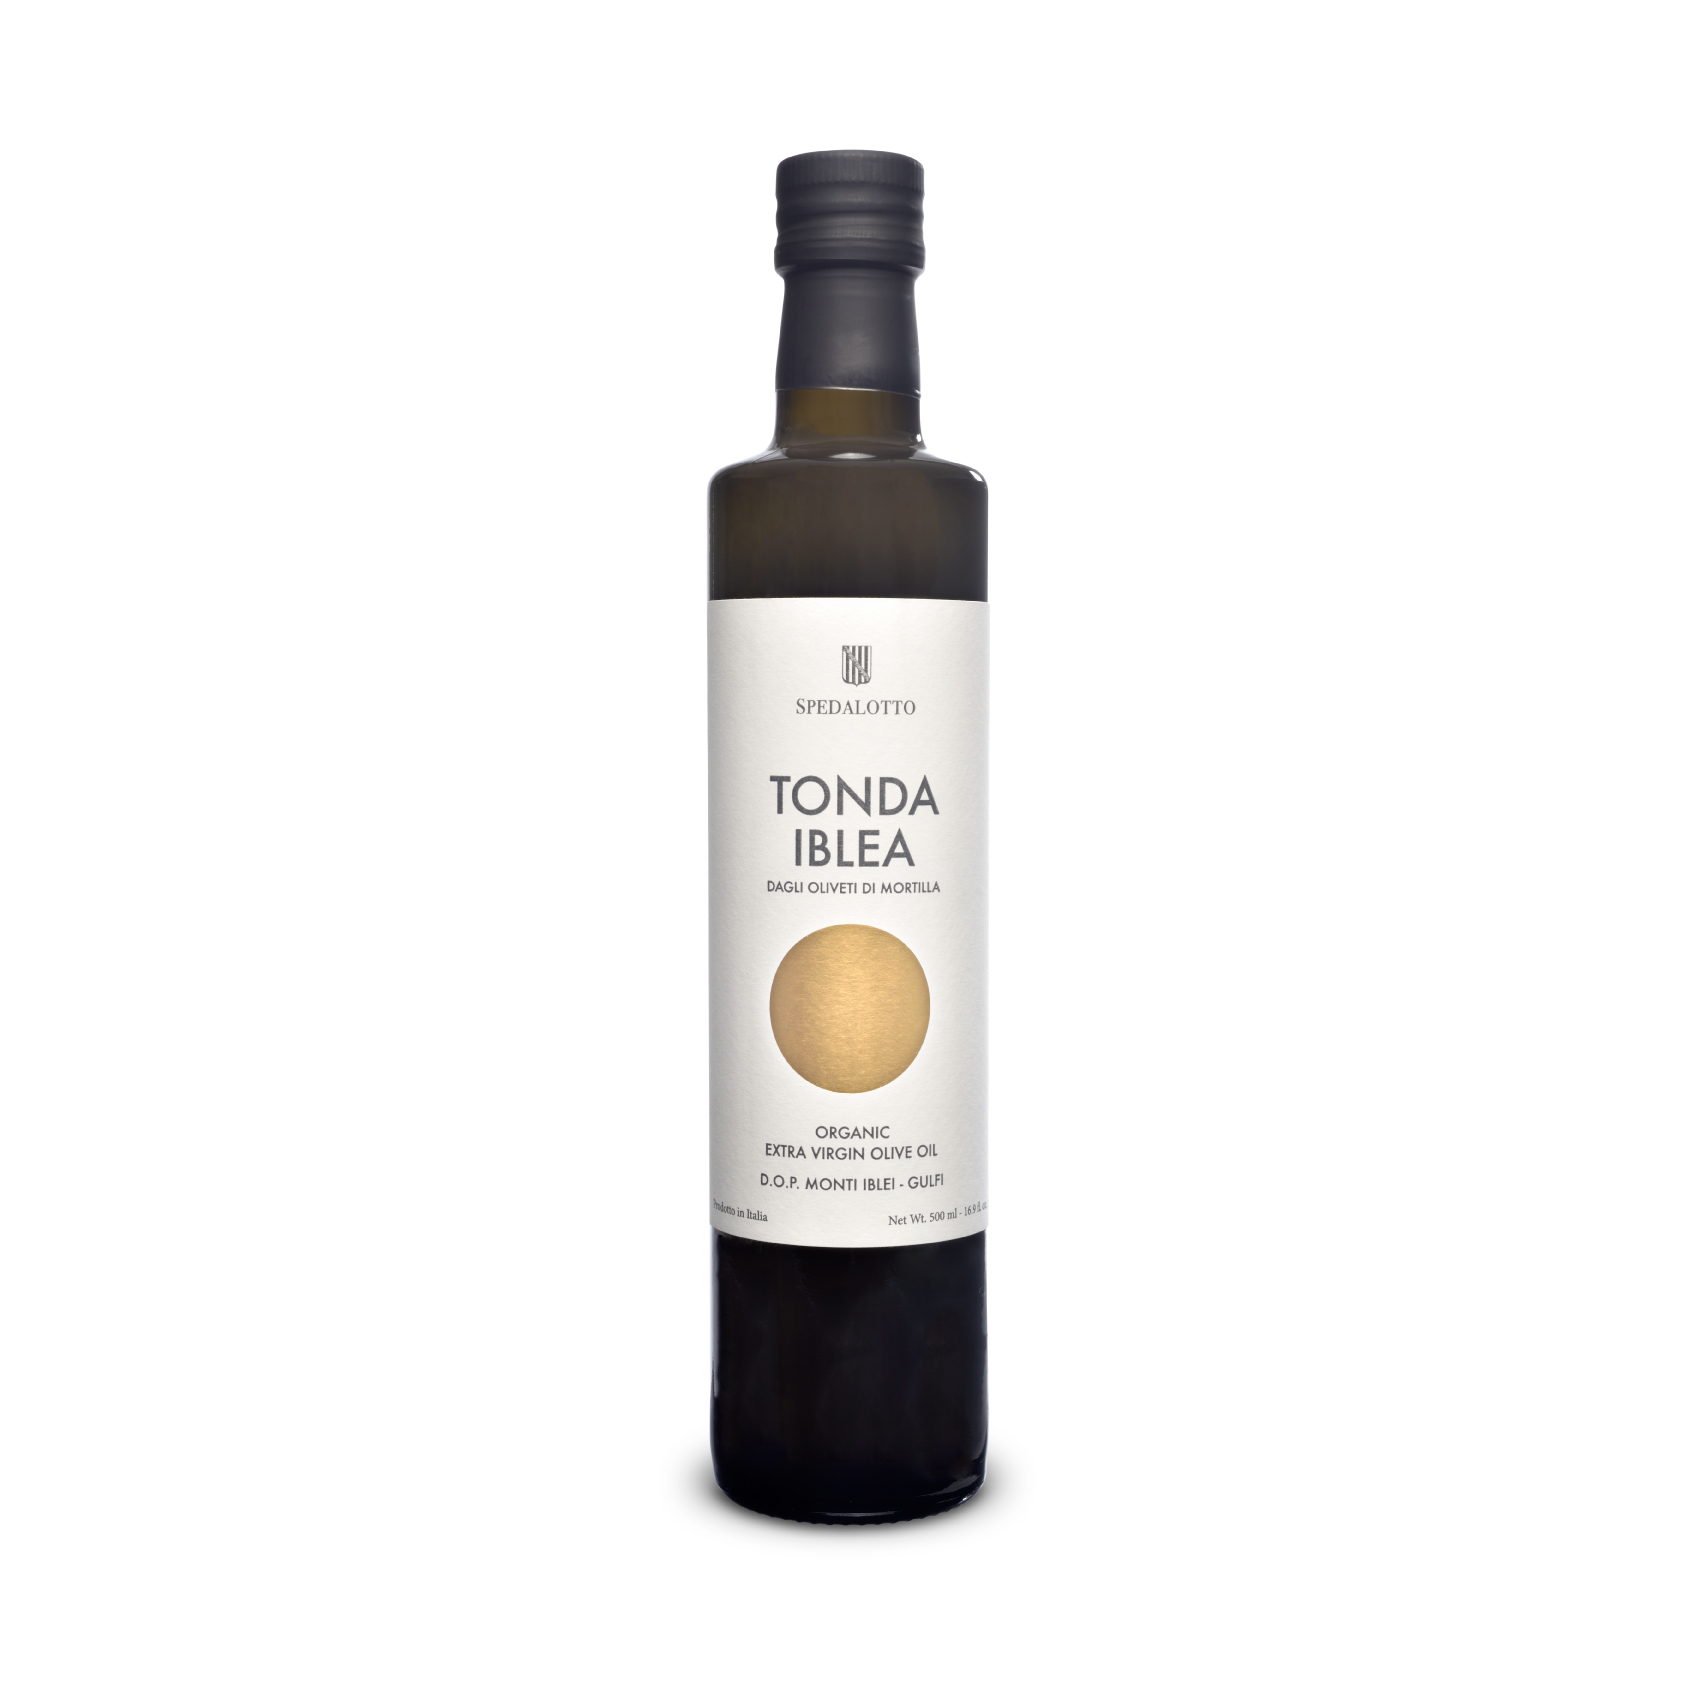 Spedalotto Tonda Iblea: Organic Extra Virgin Olive Oil, condiments, additives